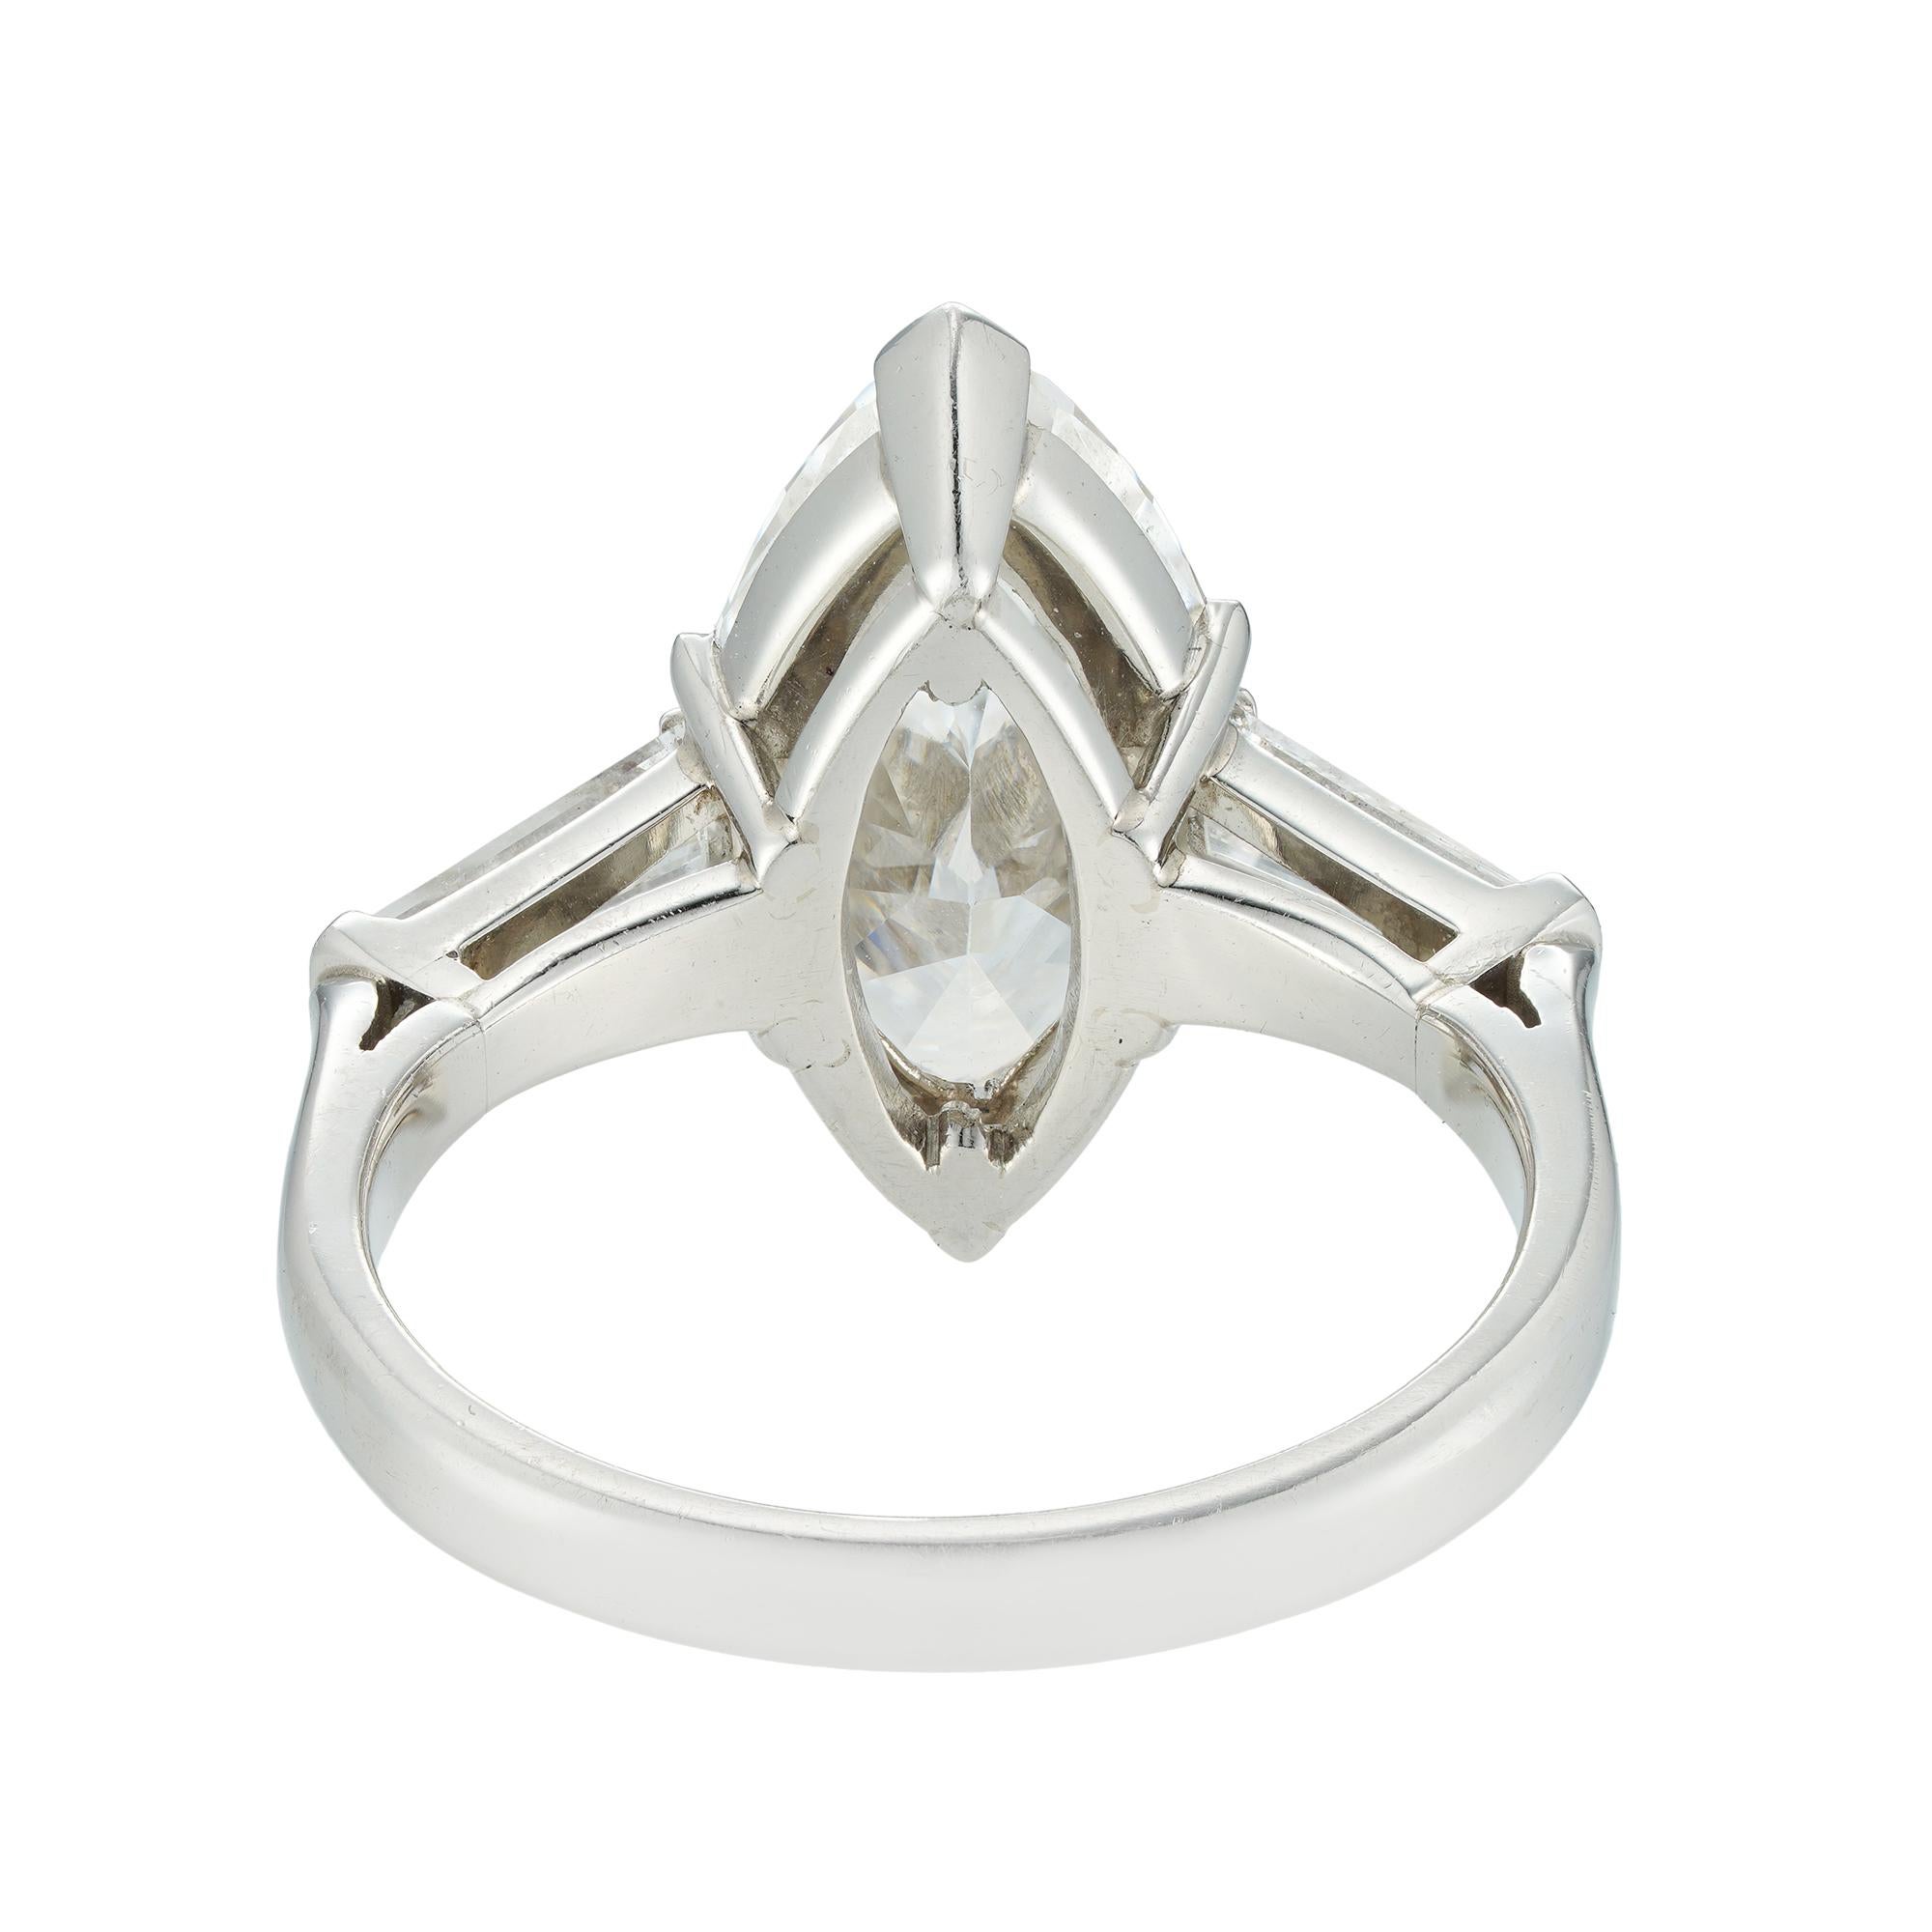 3.5 carat marquise diamond ring